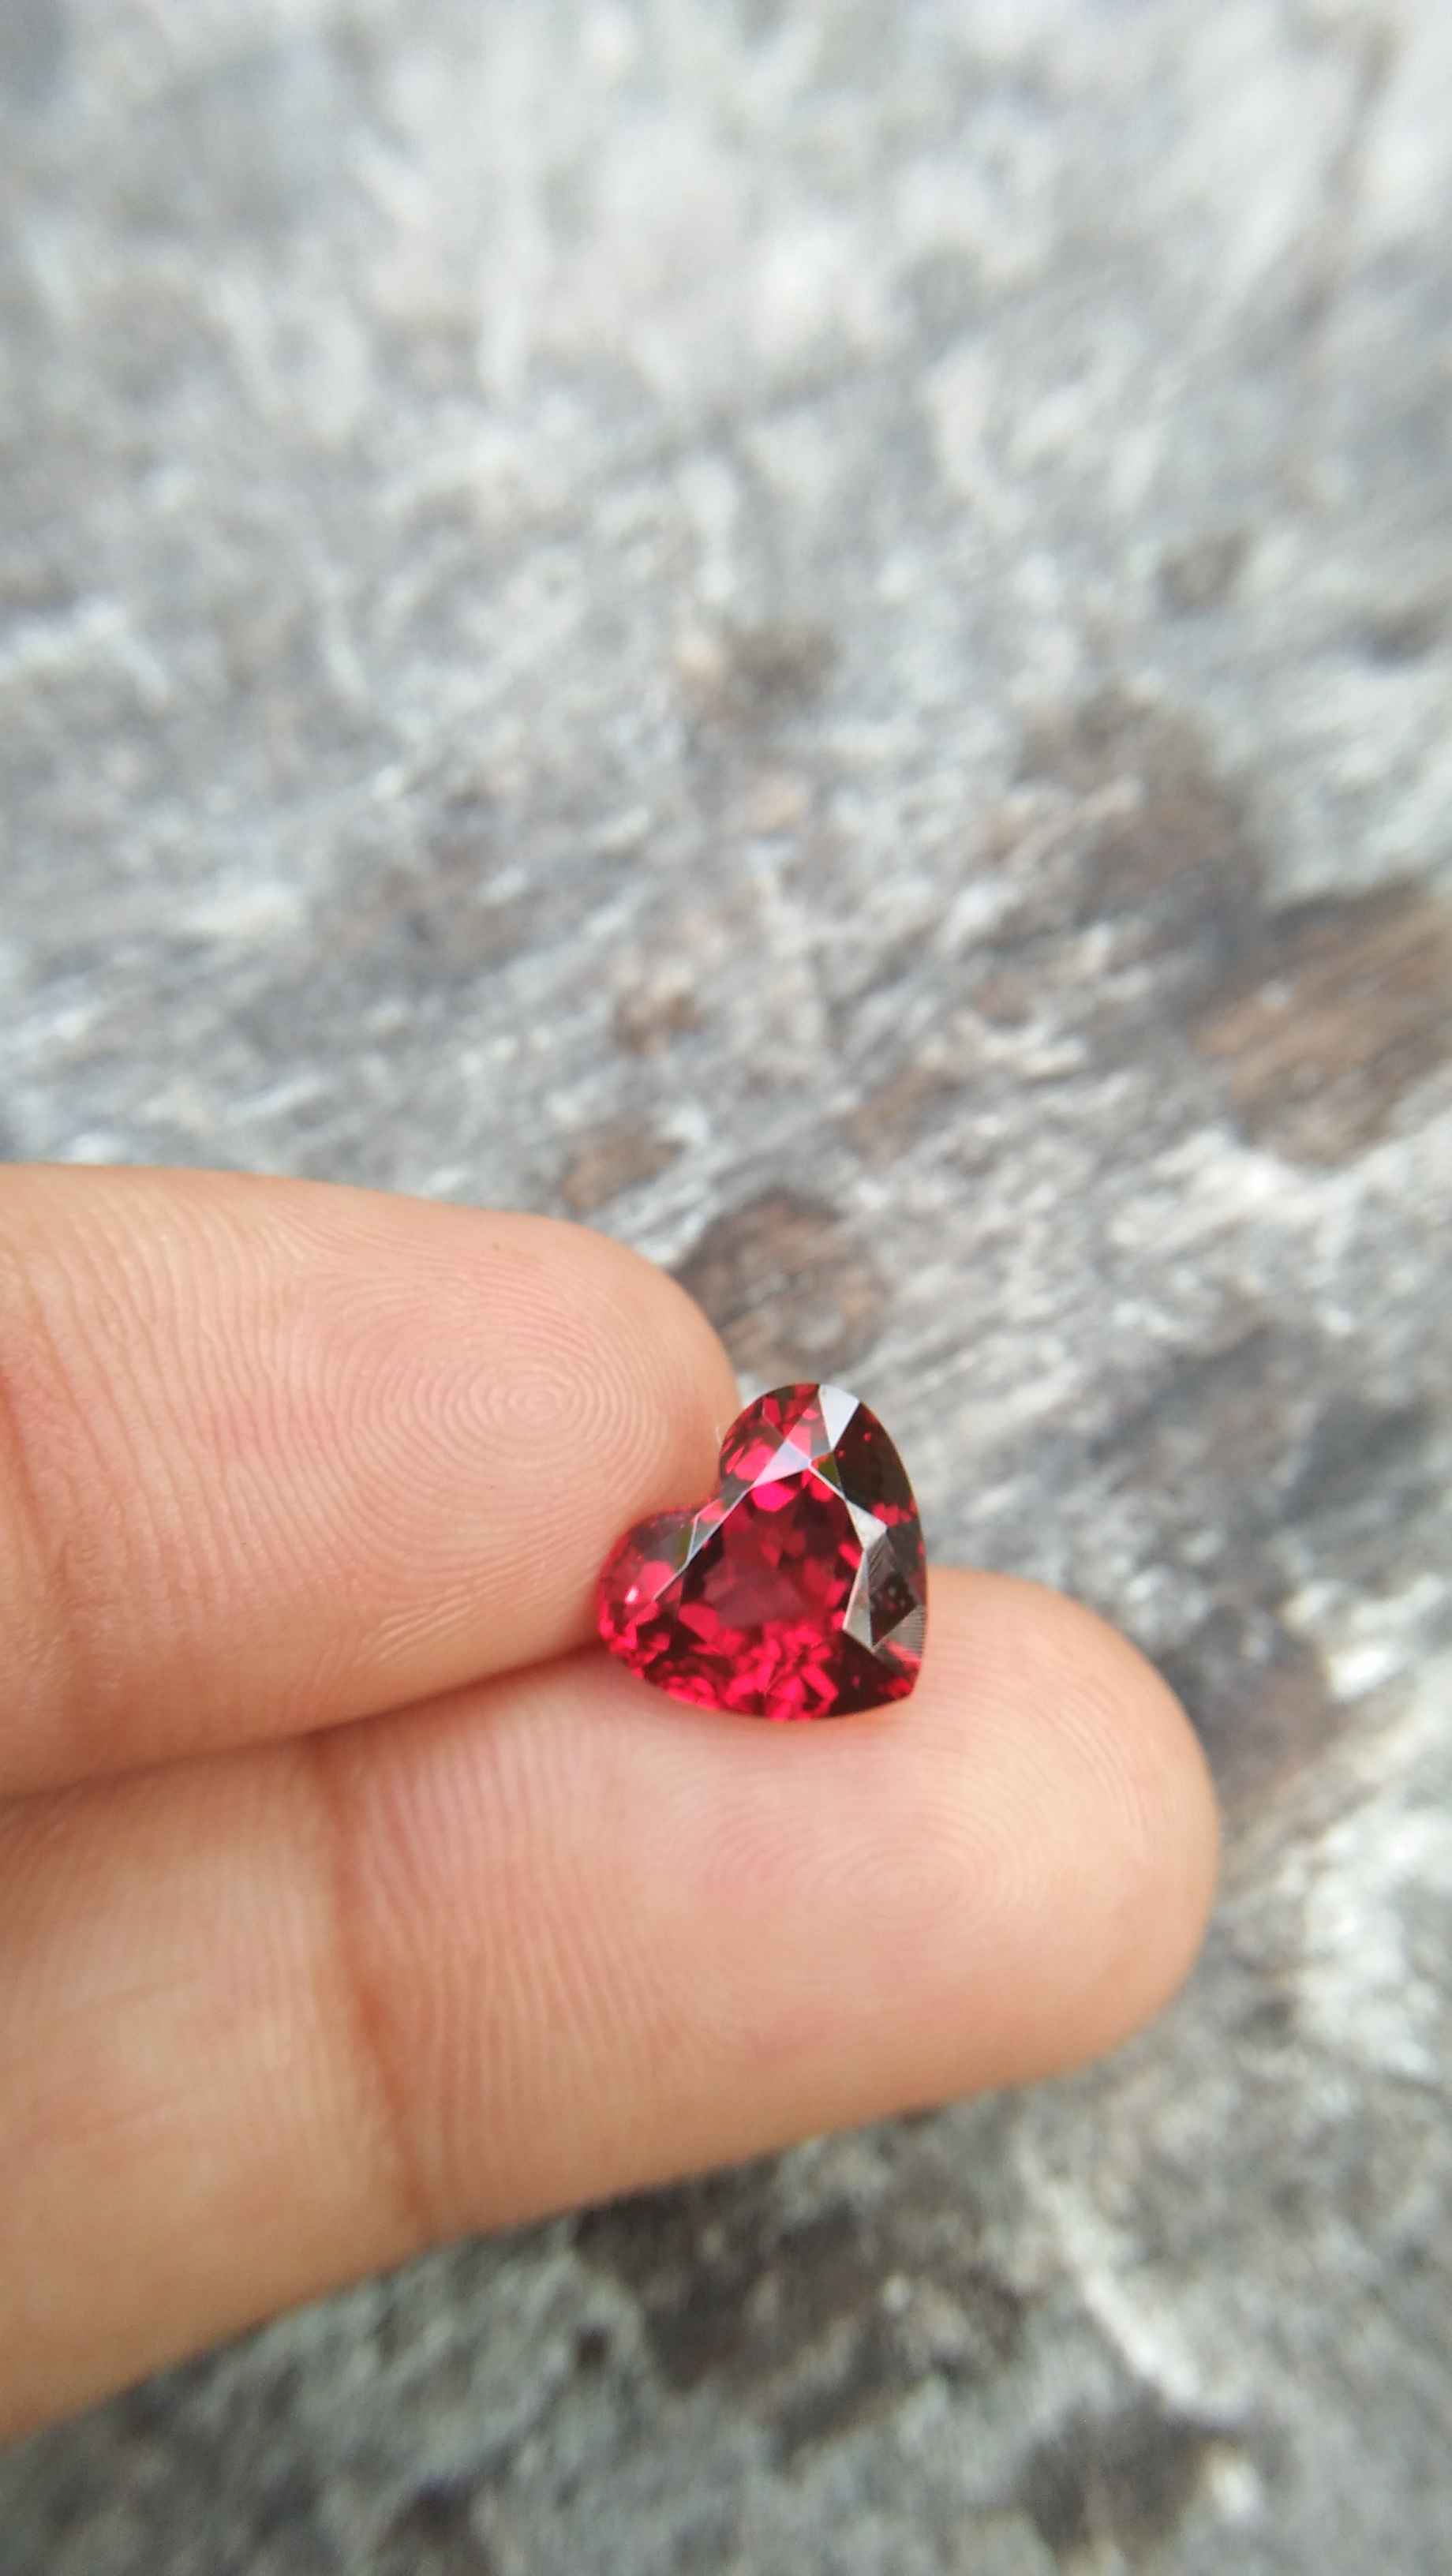 Ceylon Natural Almandine Garnet Dimension : 9.1mm x 10.2mm x 5.7mm Weight : 4.05cts Shape : Heart Colour : Red Treatment : Unheated / Natural Mineral : Ratnapura, Sri Lanka